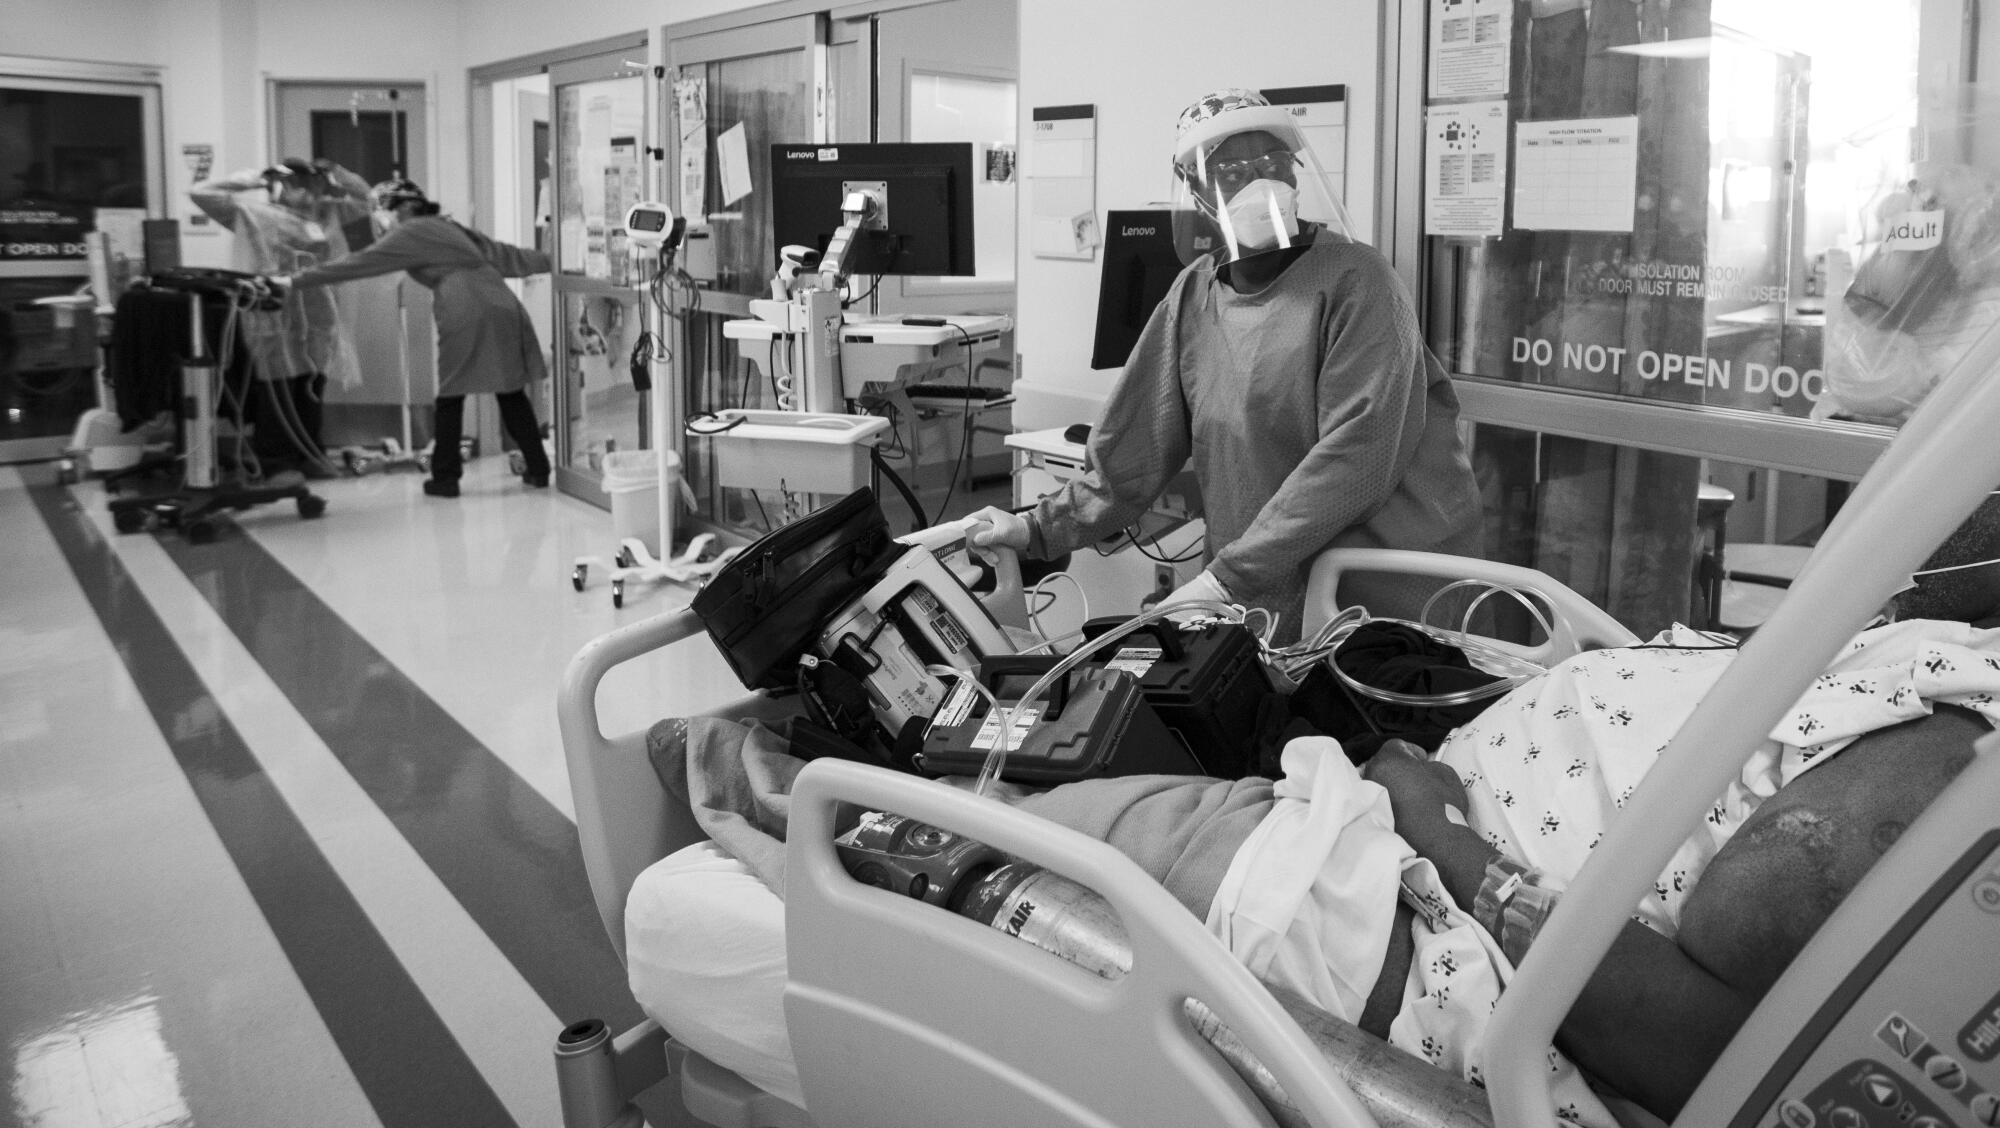 Nurse Quinnece Washington rushes a COVID-19 patient into the intensive care unit.